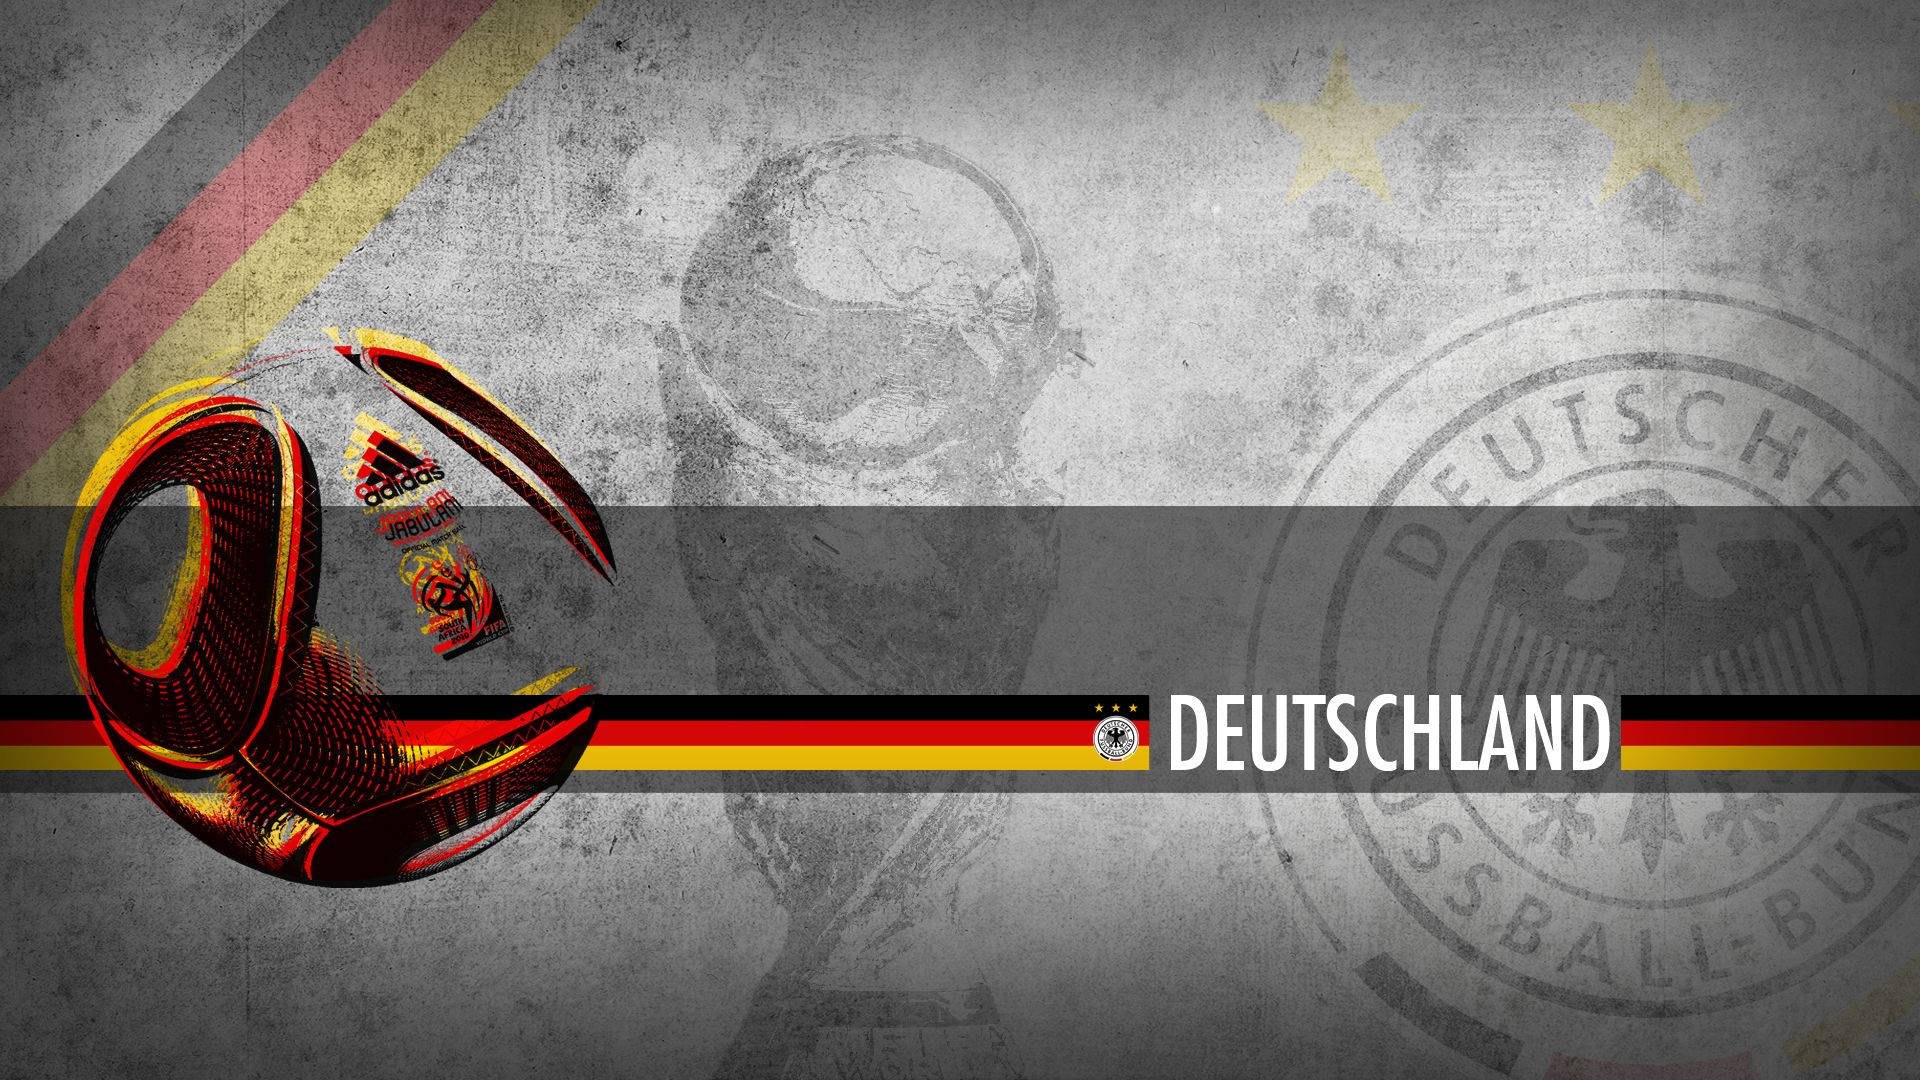 Germany National Football Team Deutschland Digital Artwork Picture